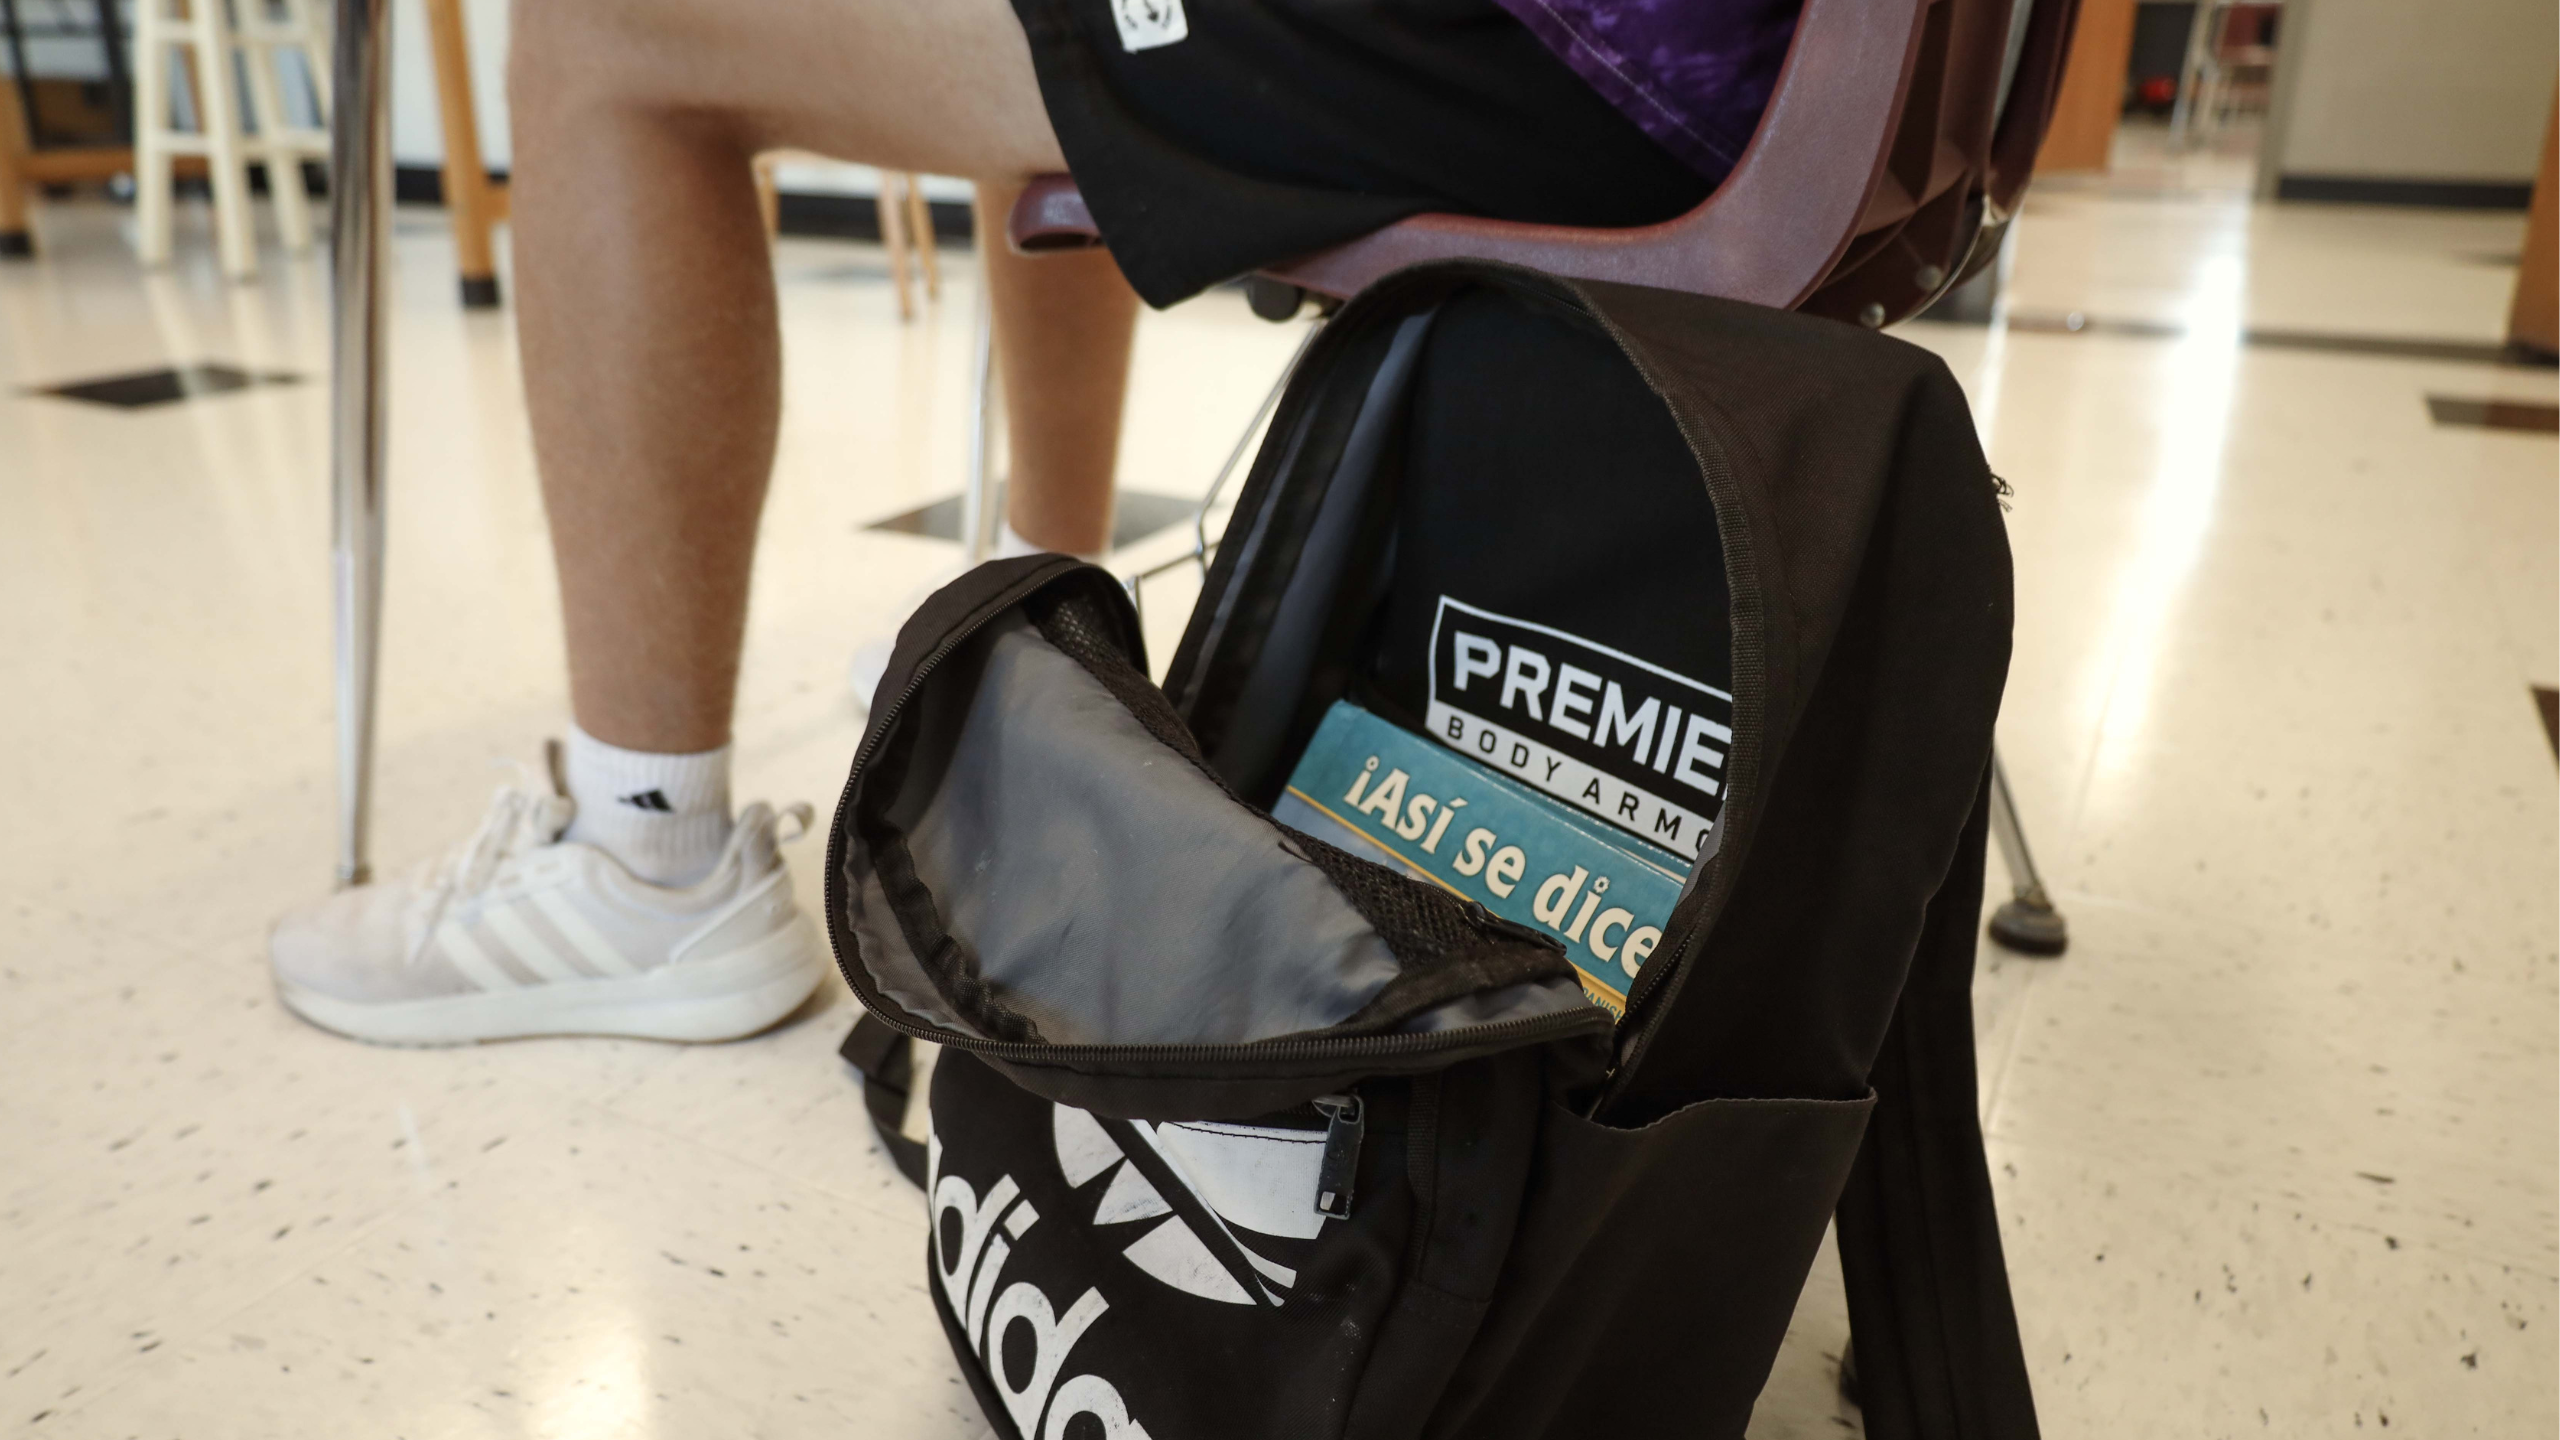 bulletproof backpack panel inside adidas bookbag in a classroom